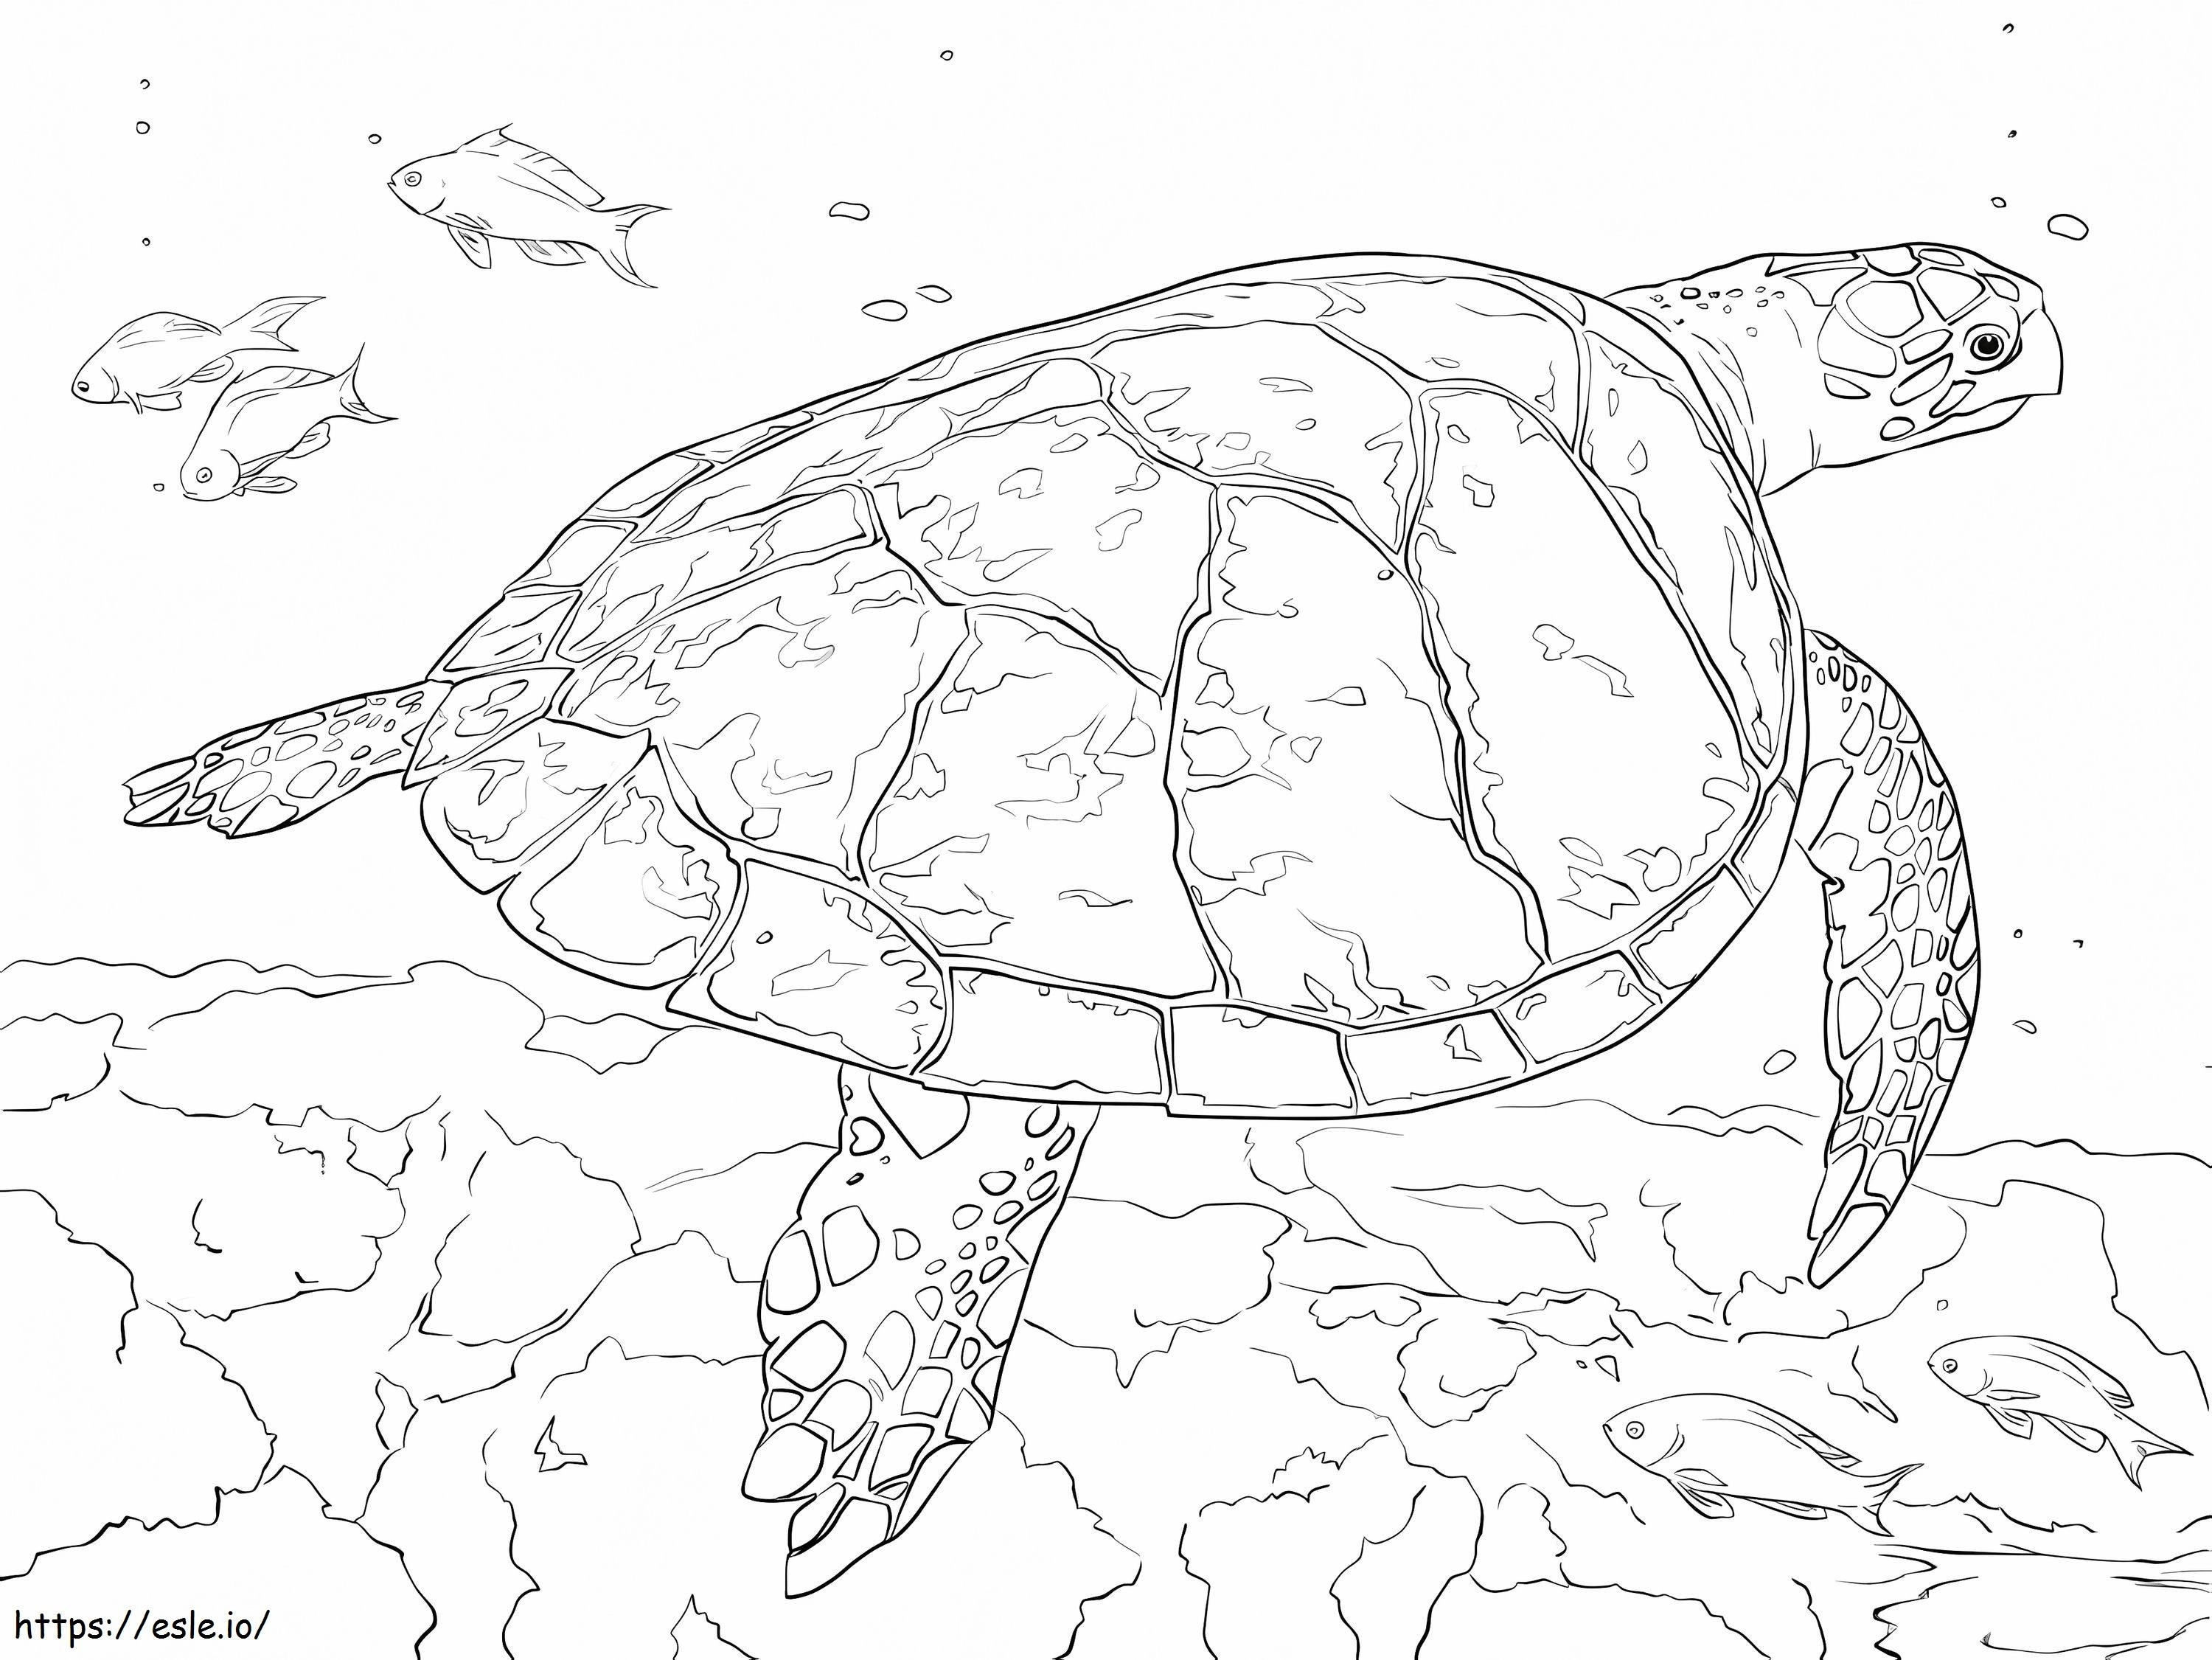 Hawksbill Sea Turtle coloring page